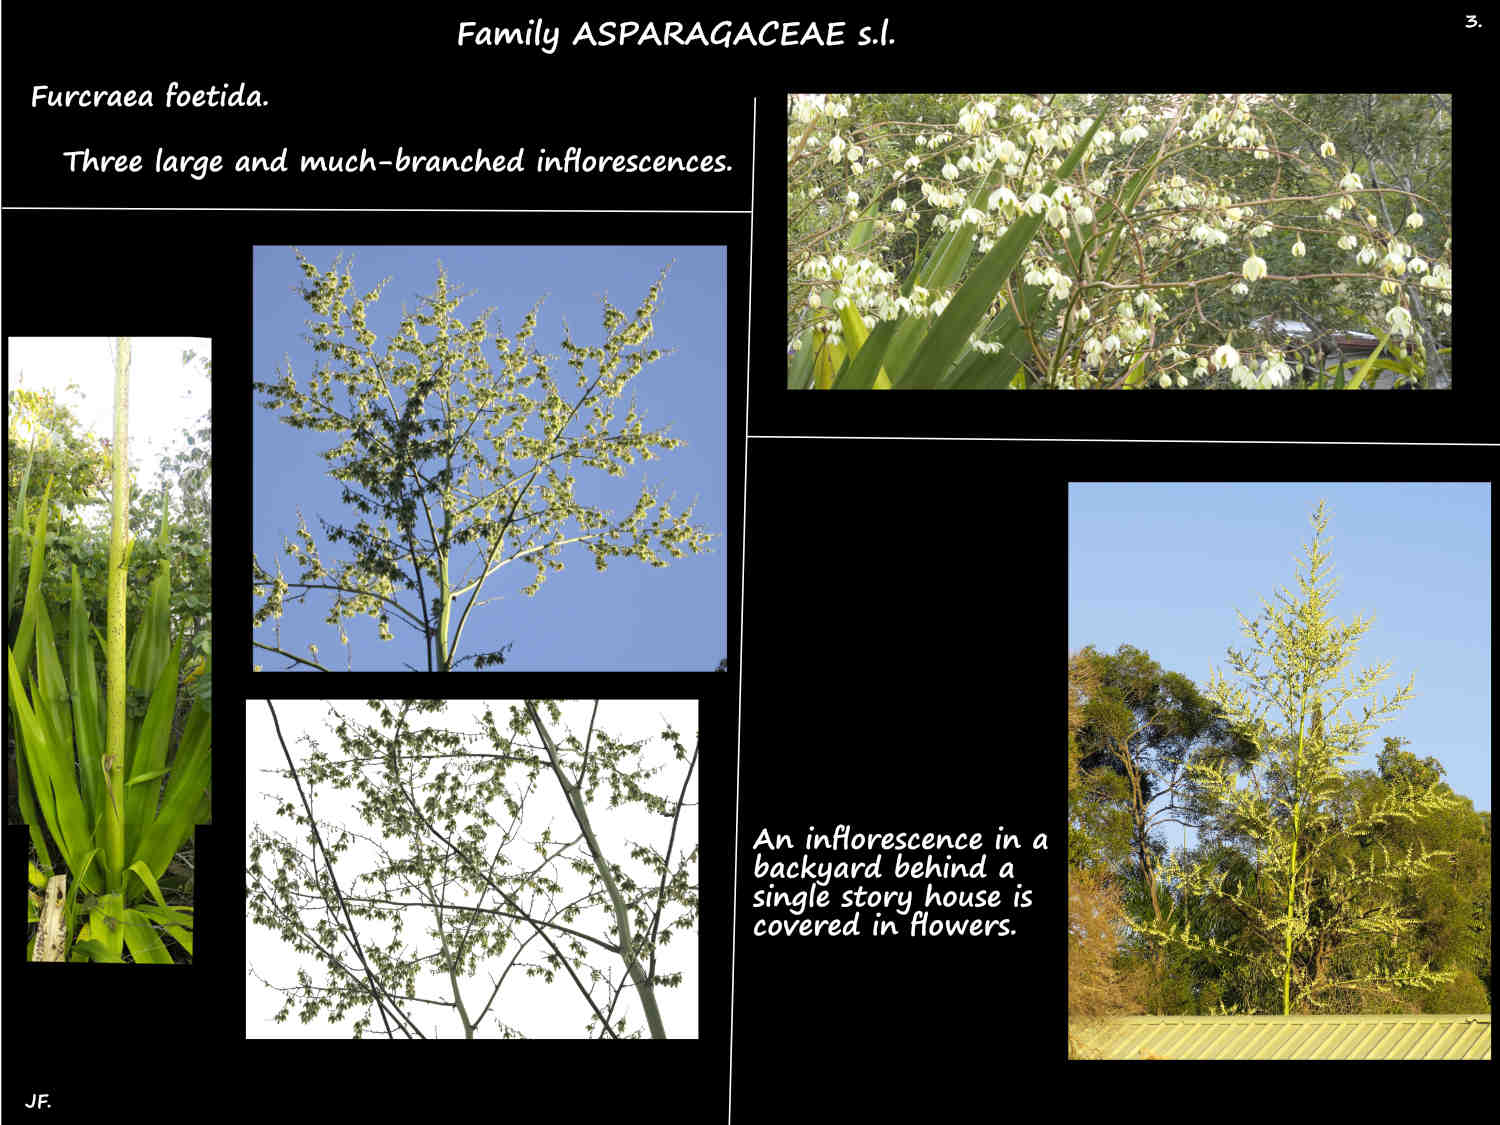 3 False agave inflorescences